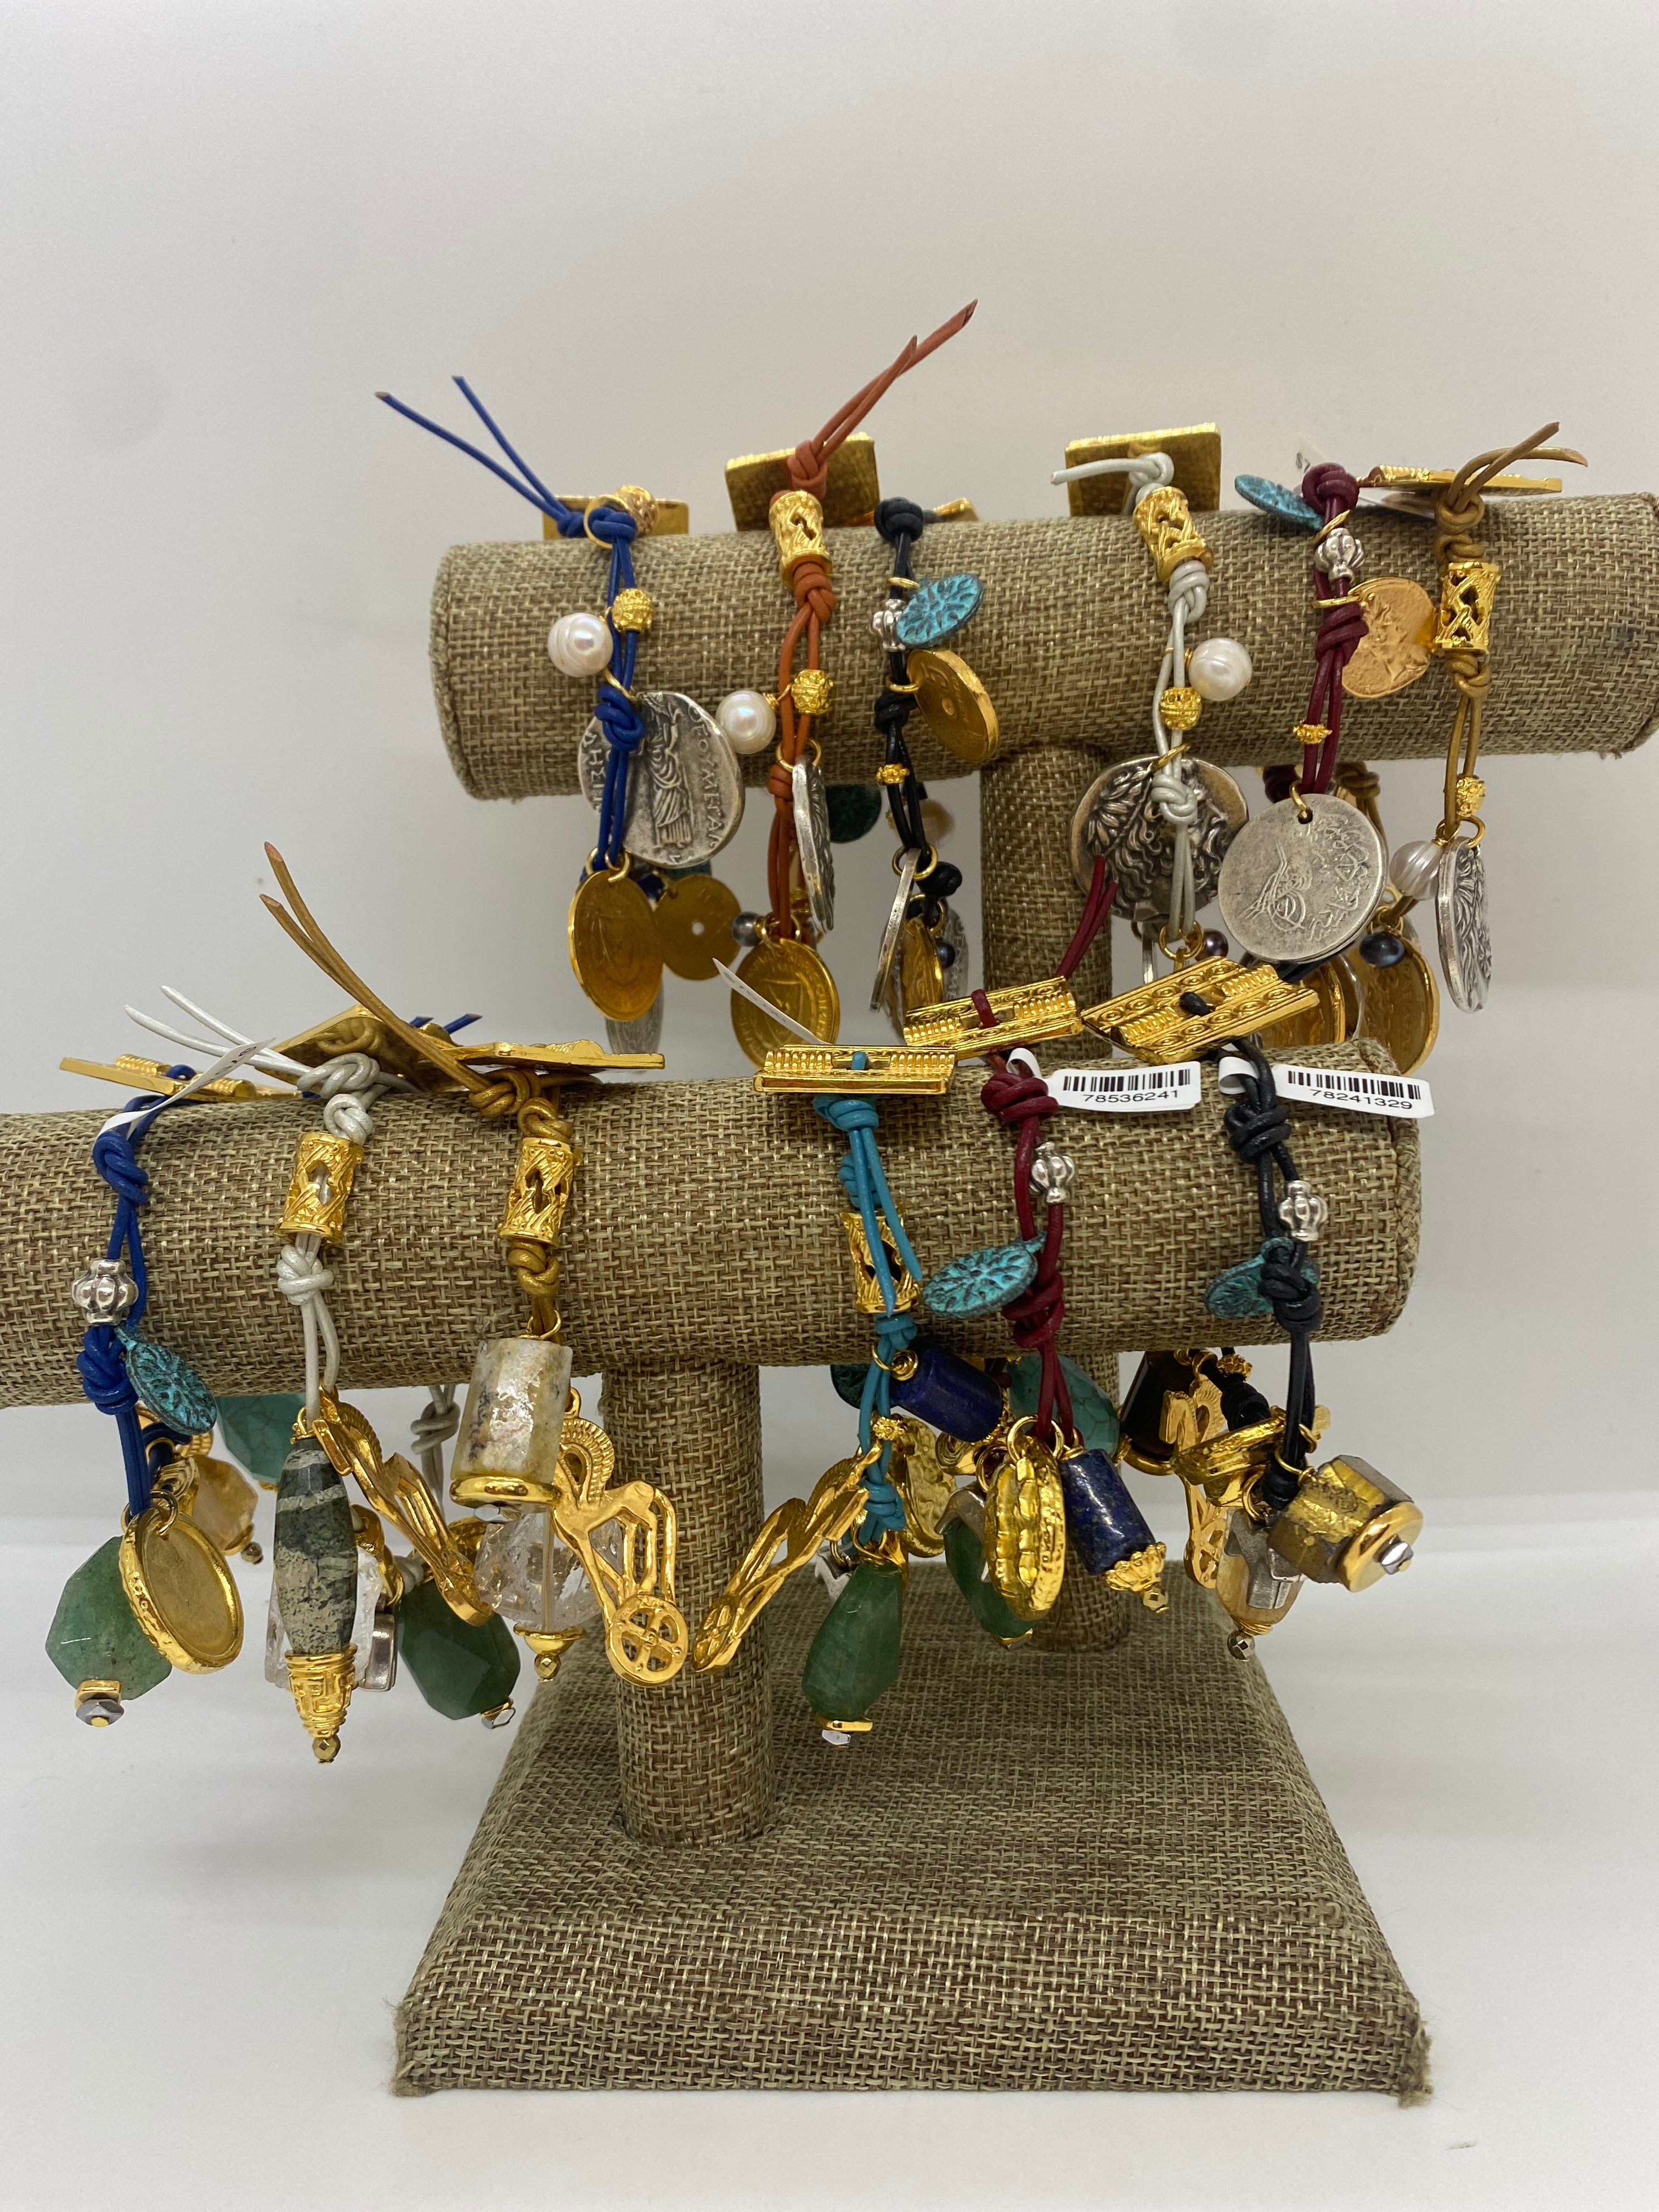 Troyan Charms Bracelets